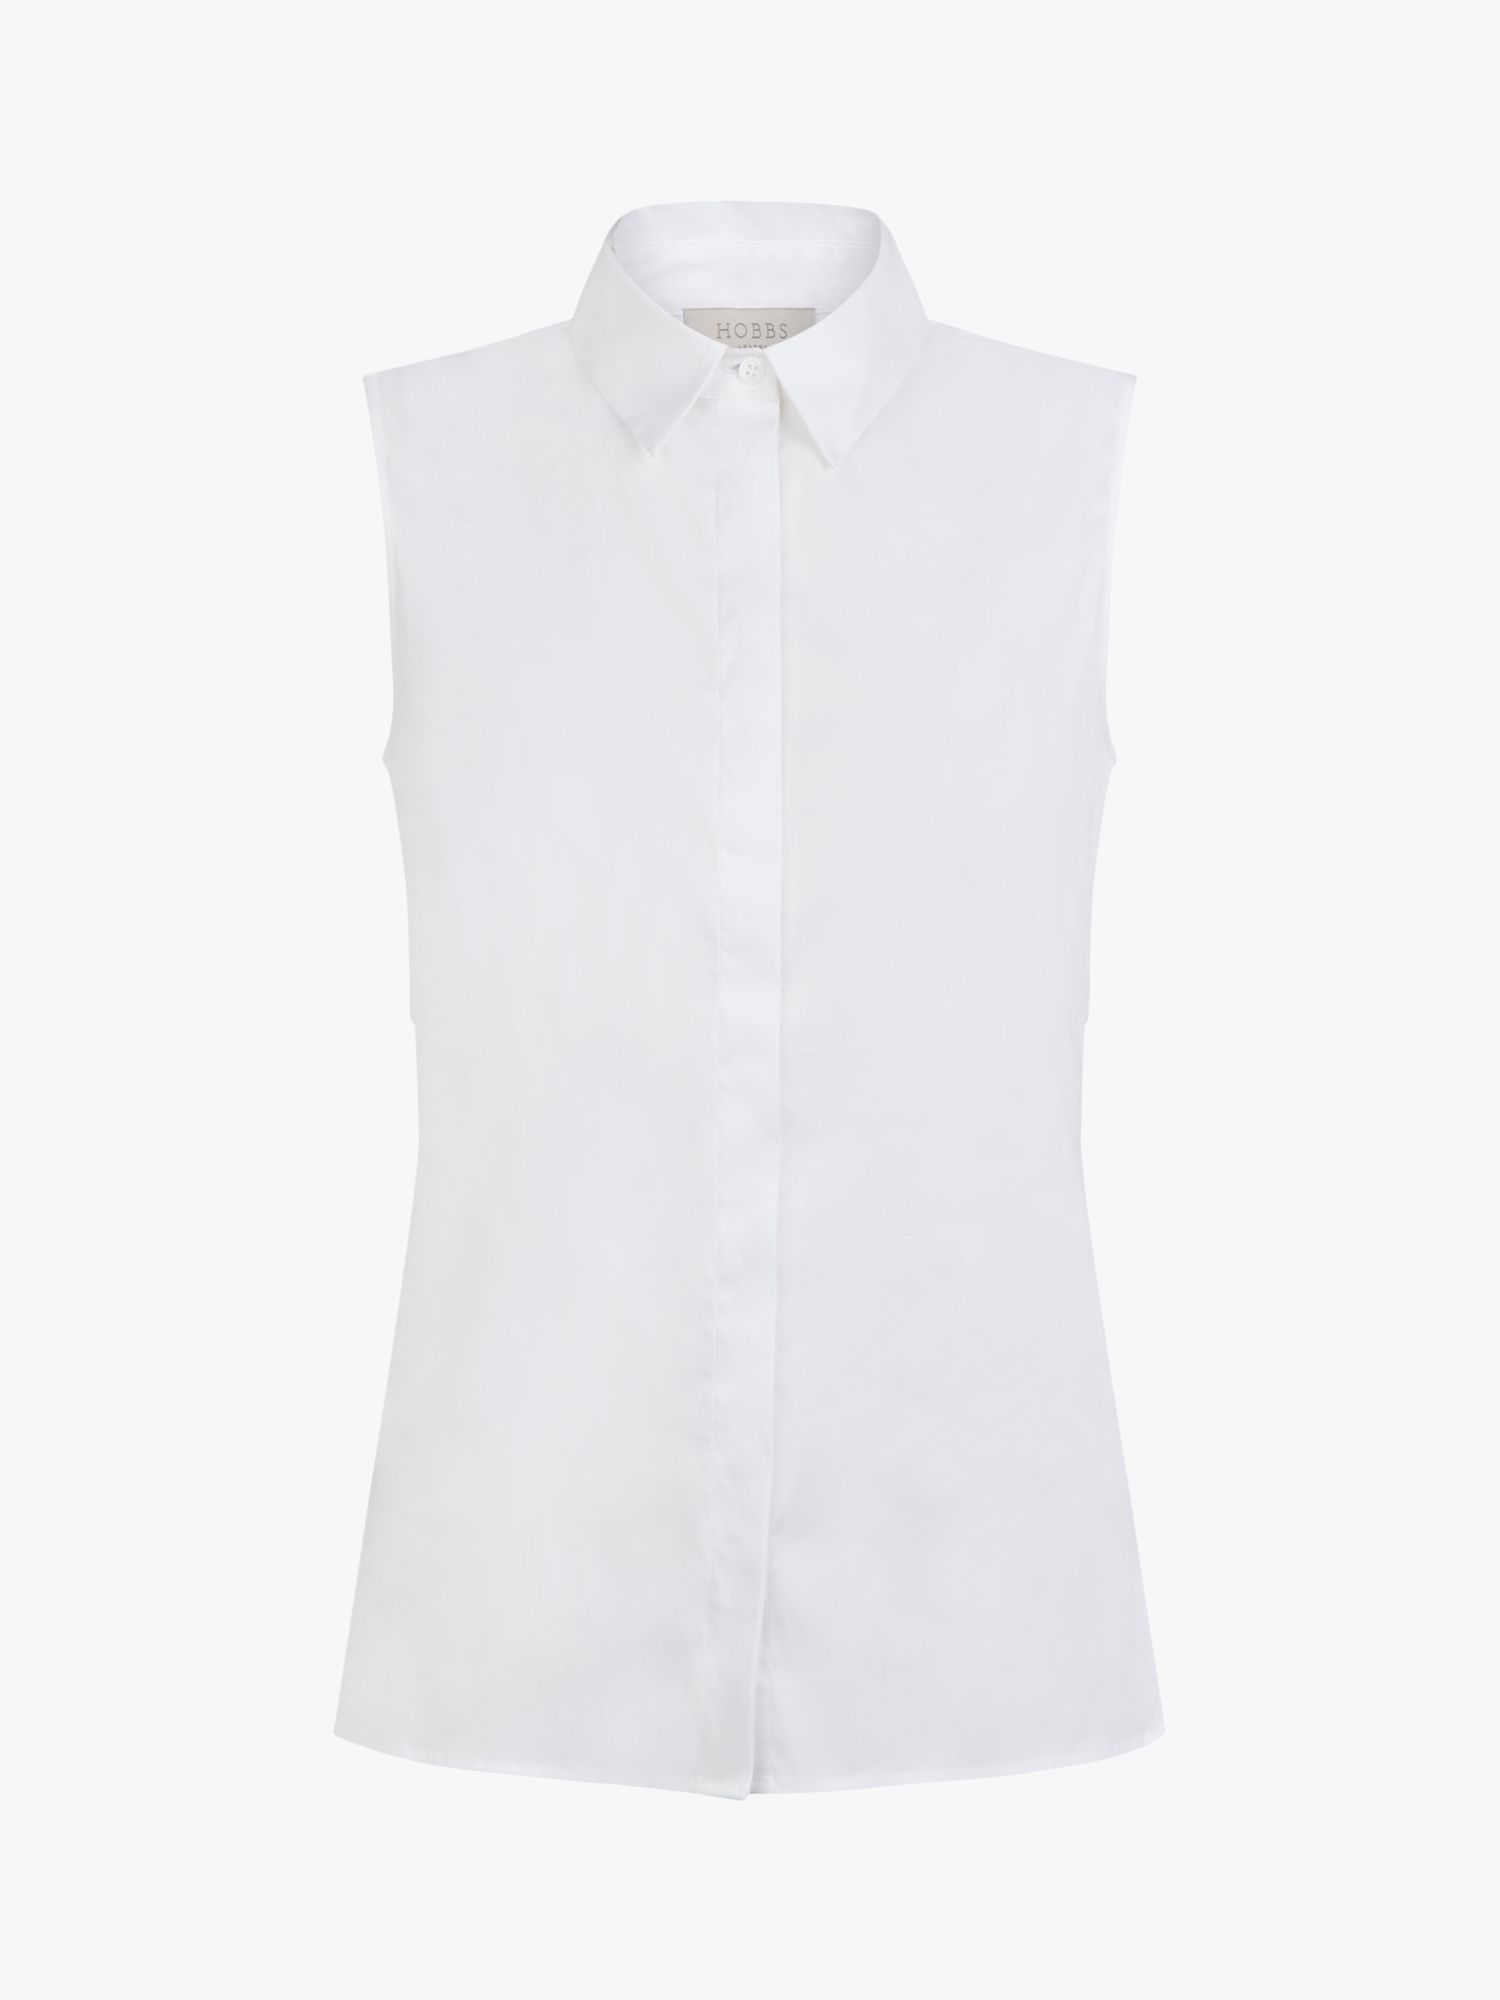 Hobbs Vic Sleeveless Shirt, White at John Lewis & Partners